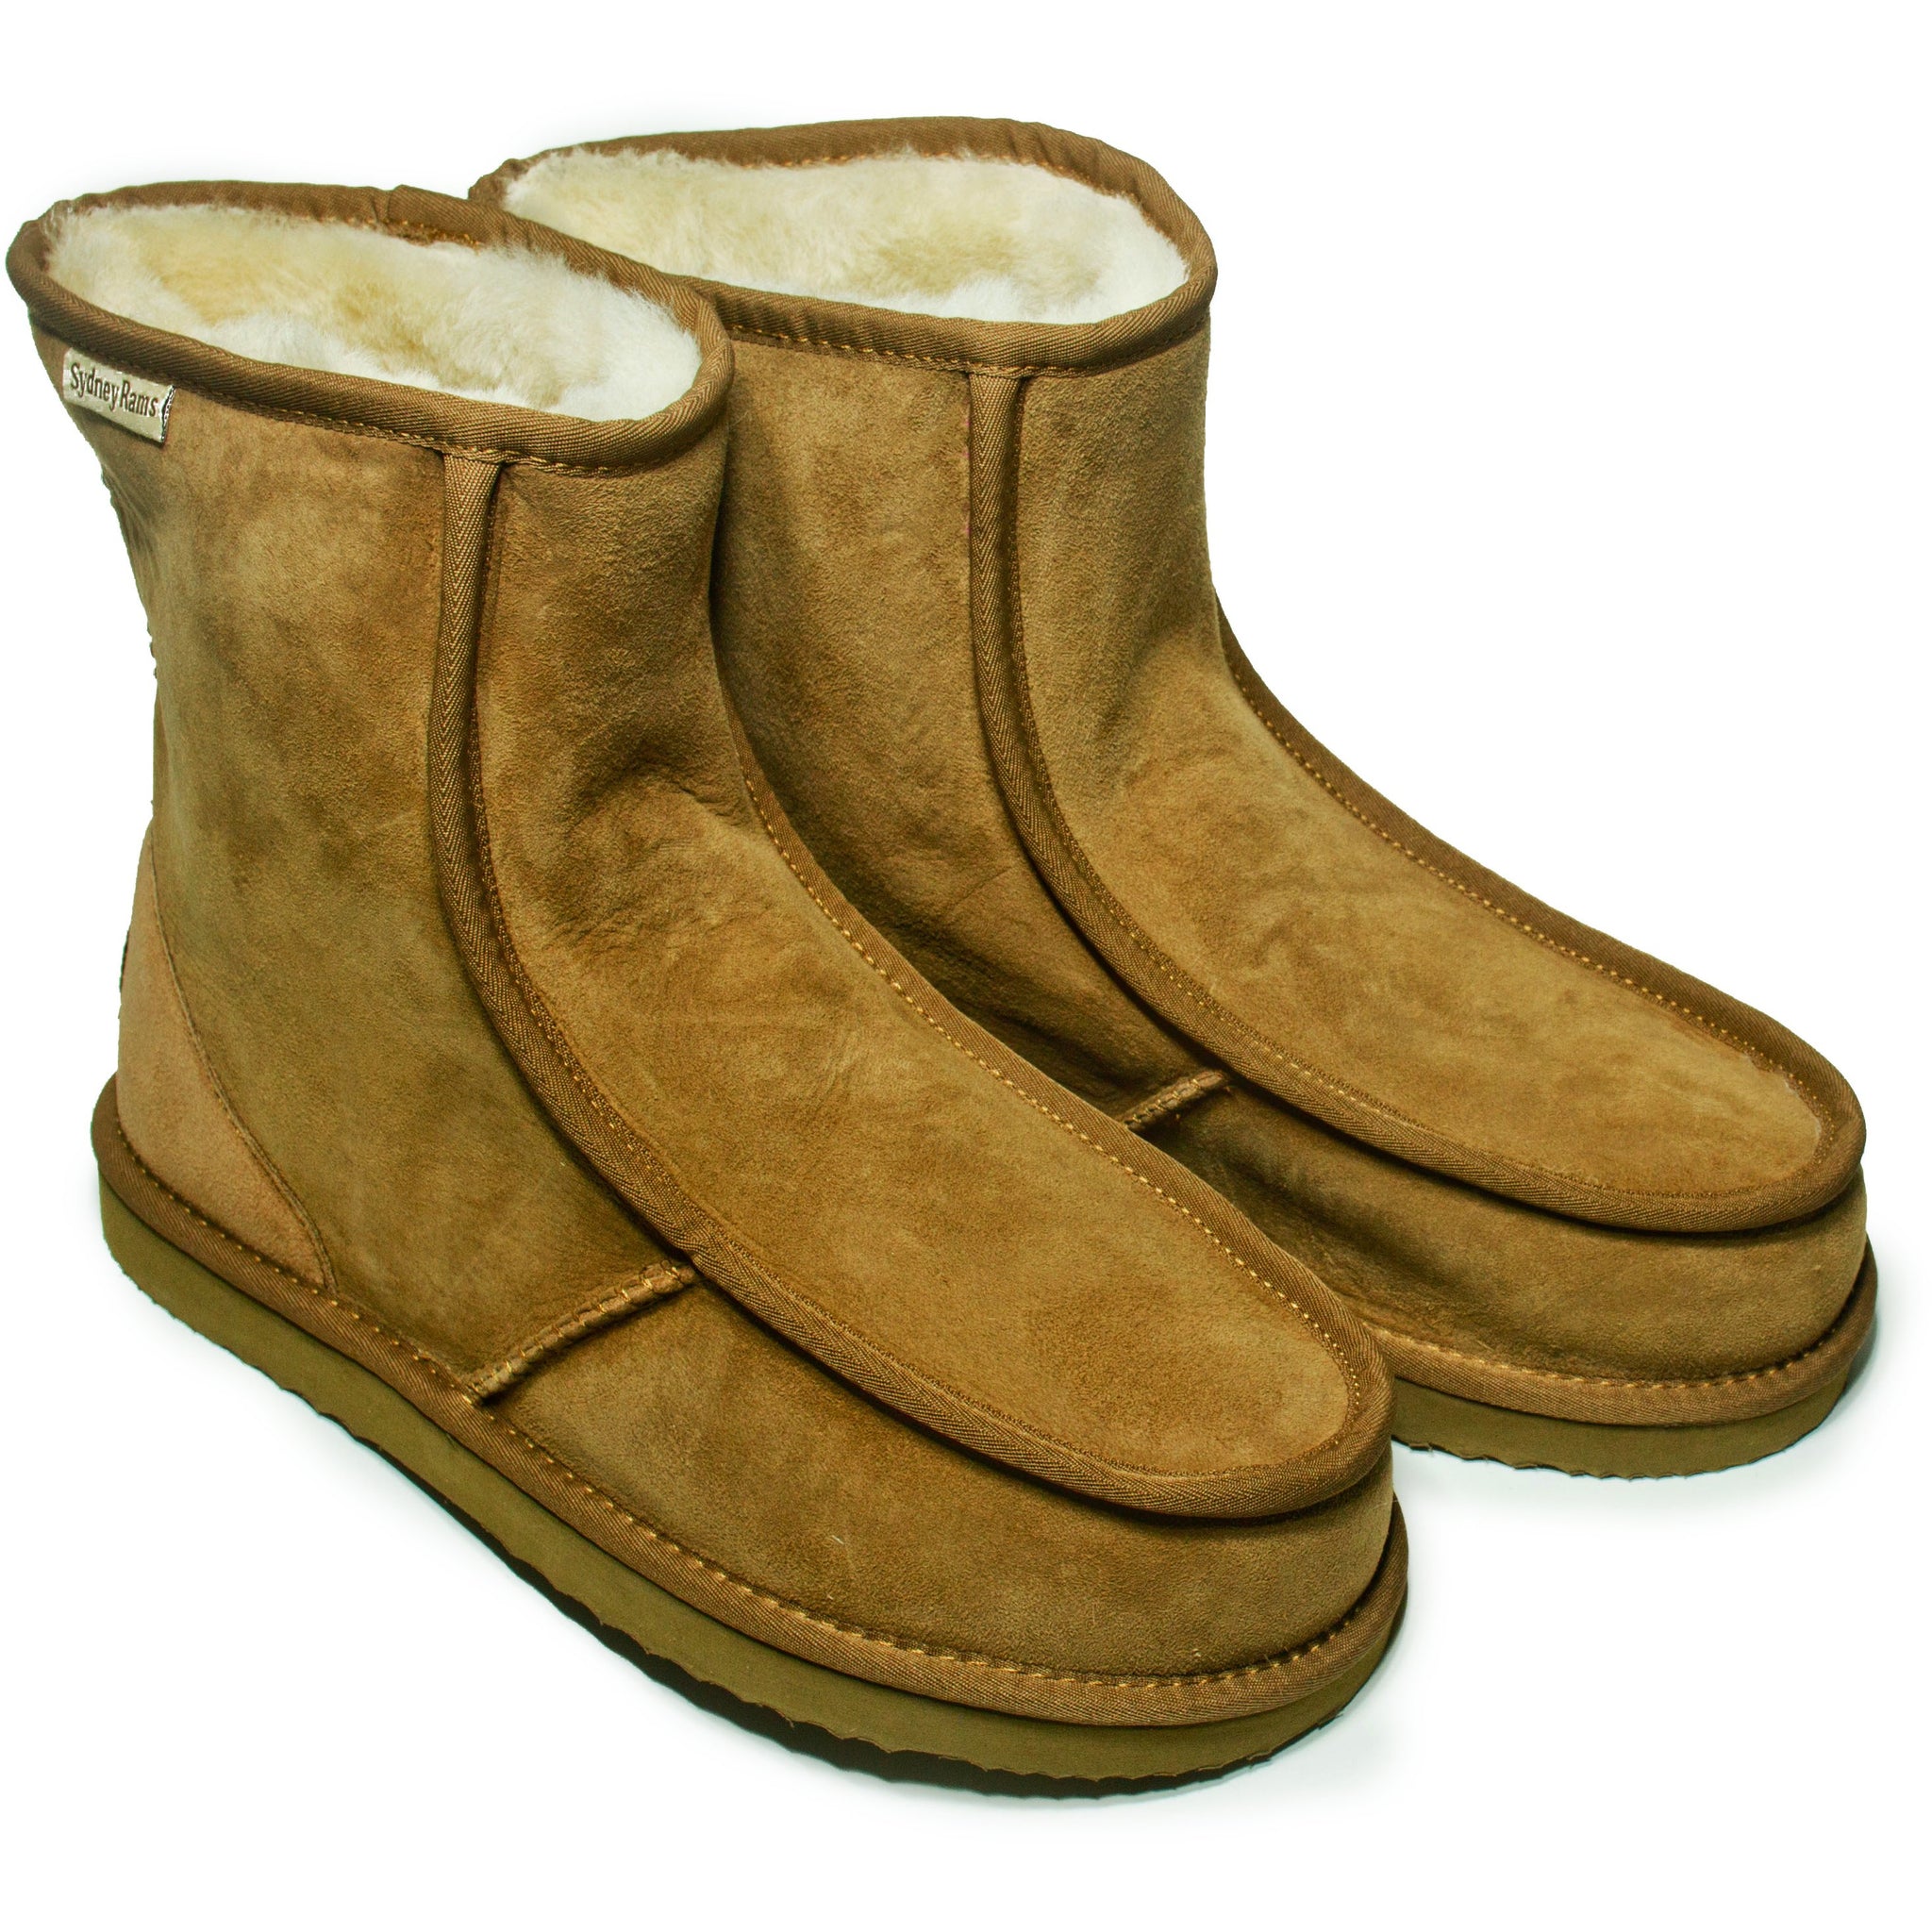 buy ugg boots australia sydney